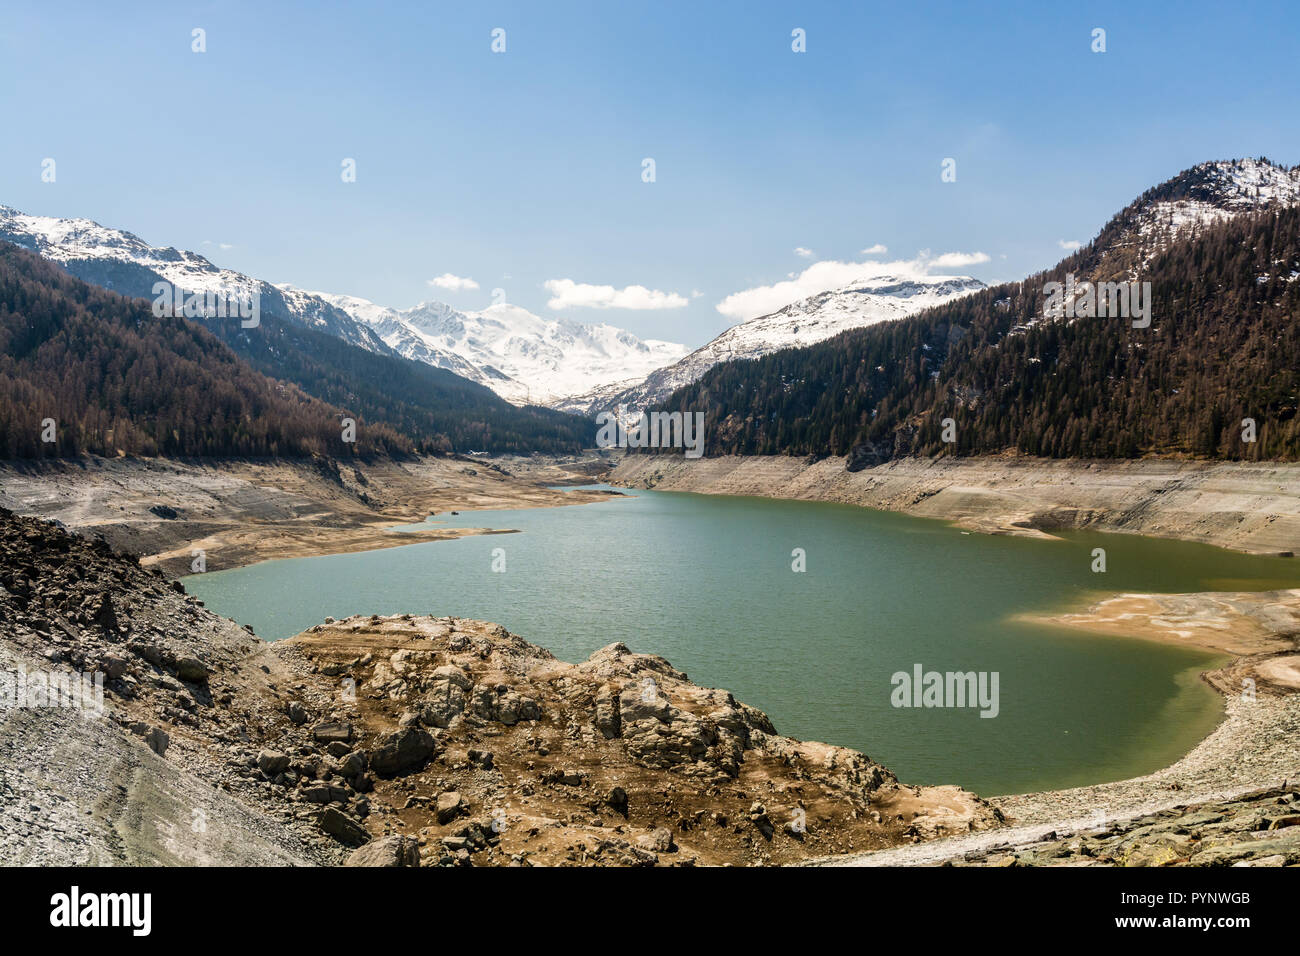 Marmorera lake near Julier mountain pass in Switzerland Stock Photo